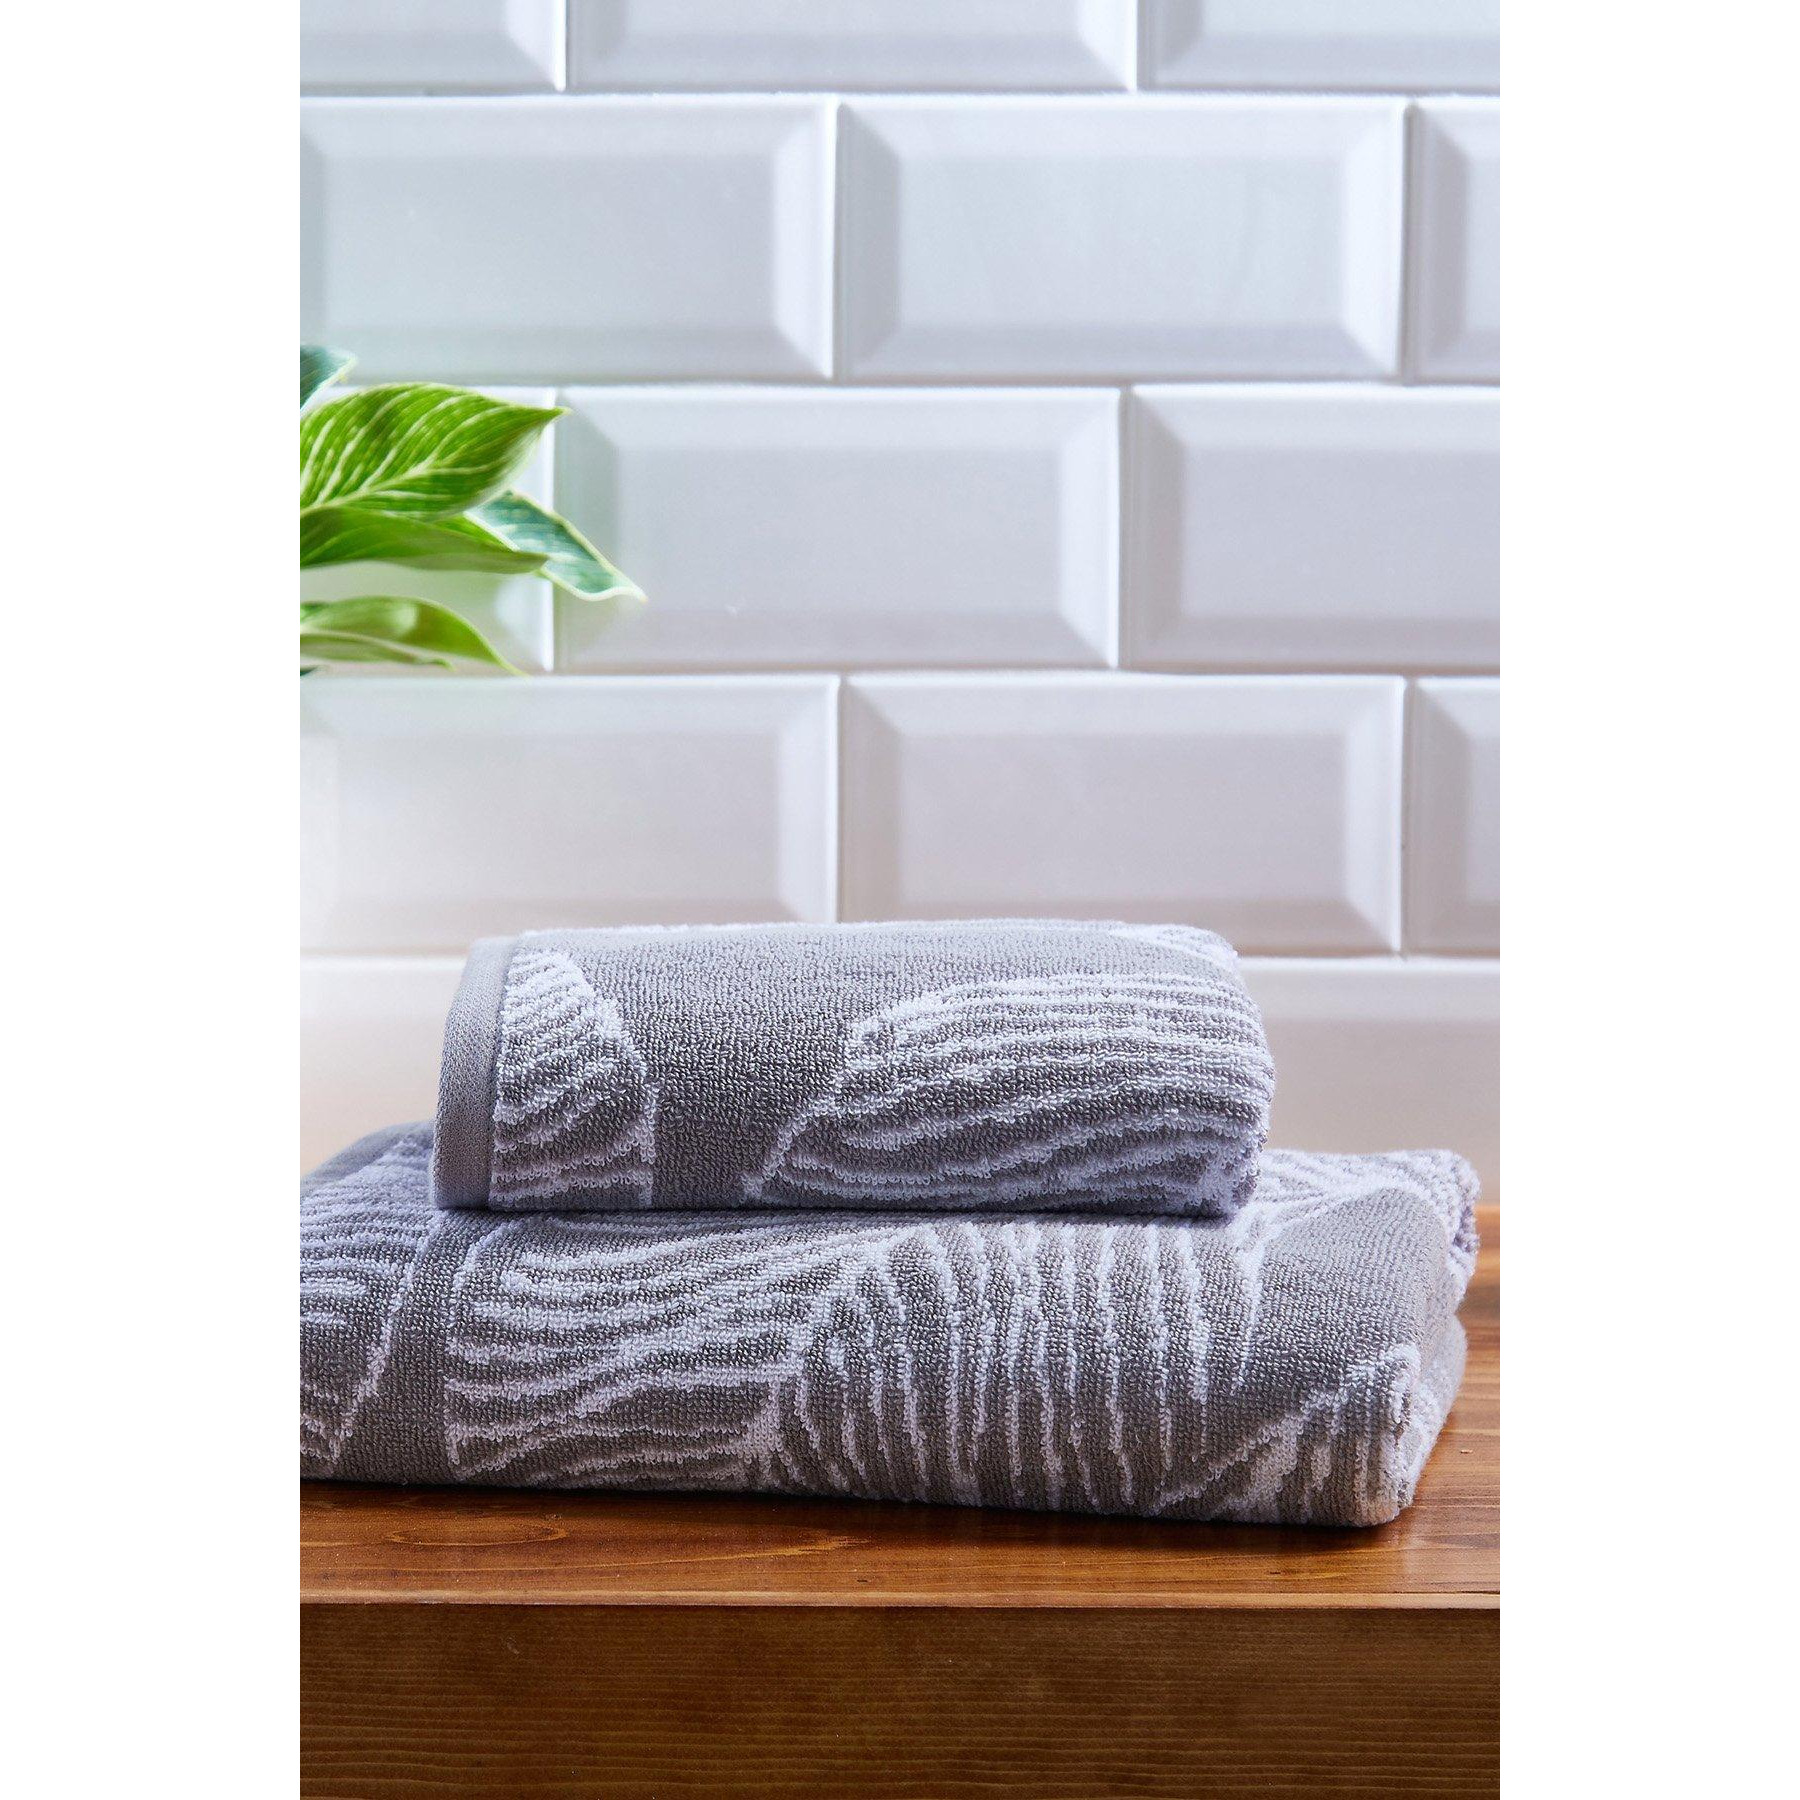 'Matteo' Luxury 100% Cotton Leaf Motif Jacquard Towel - image 1